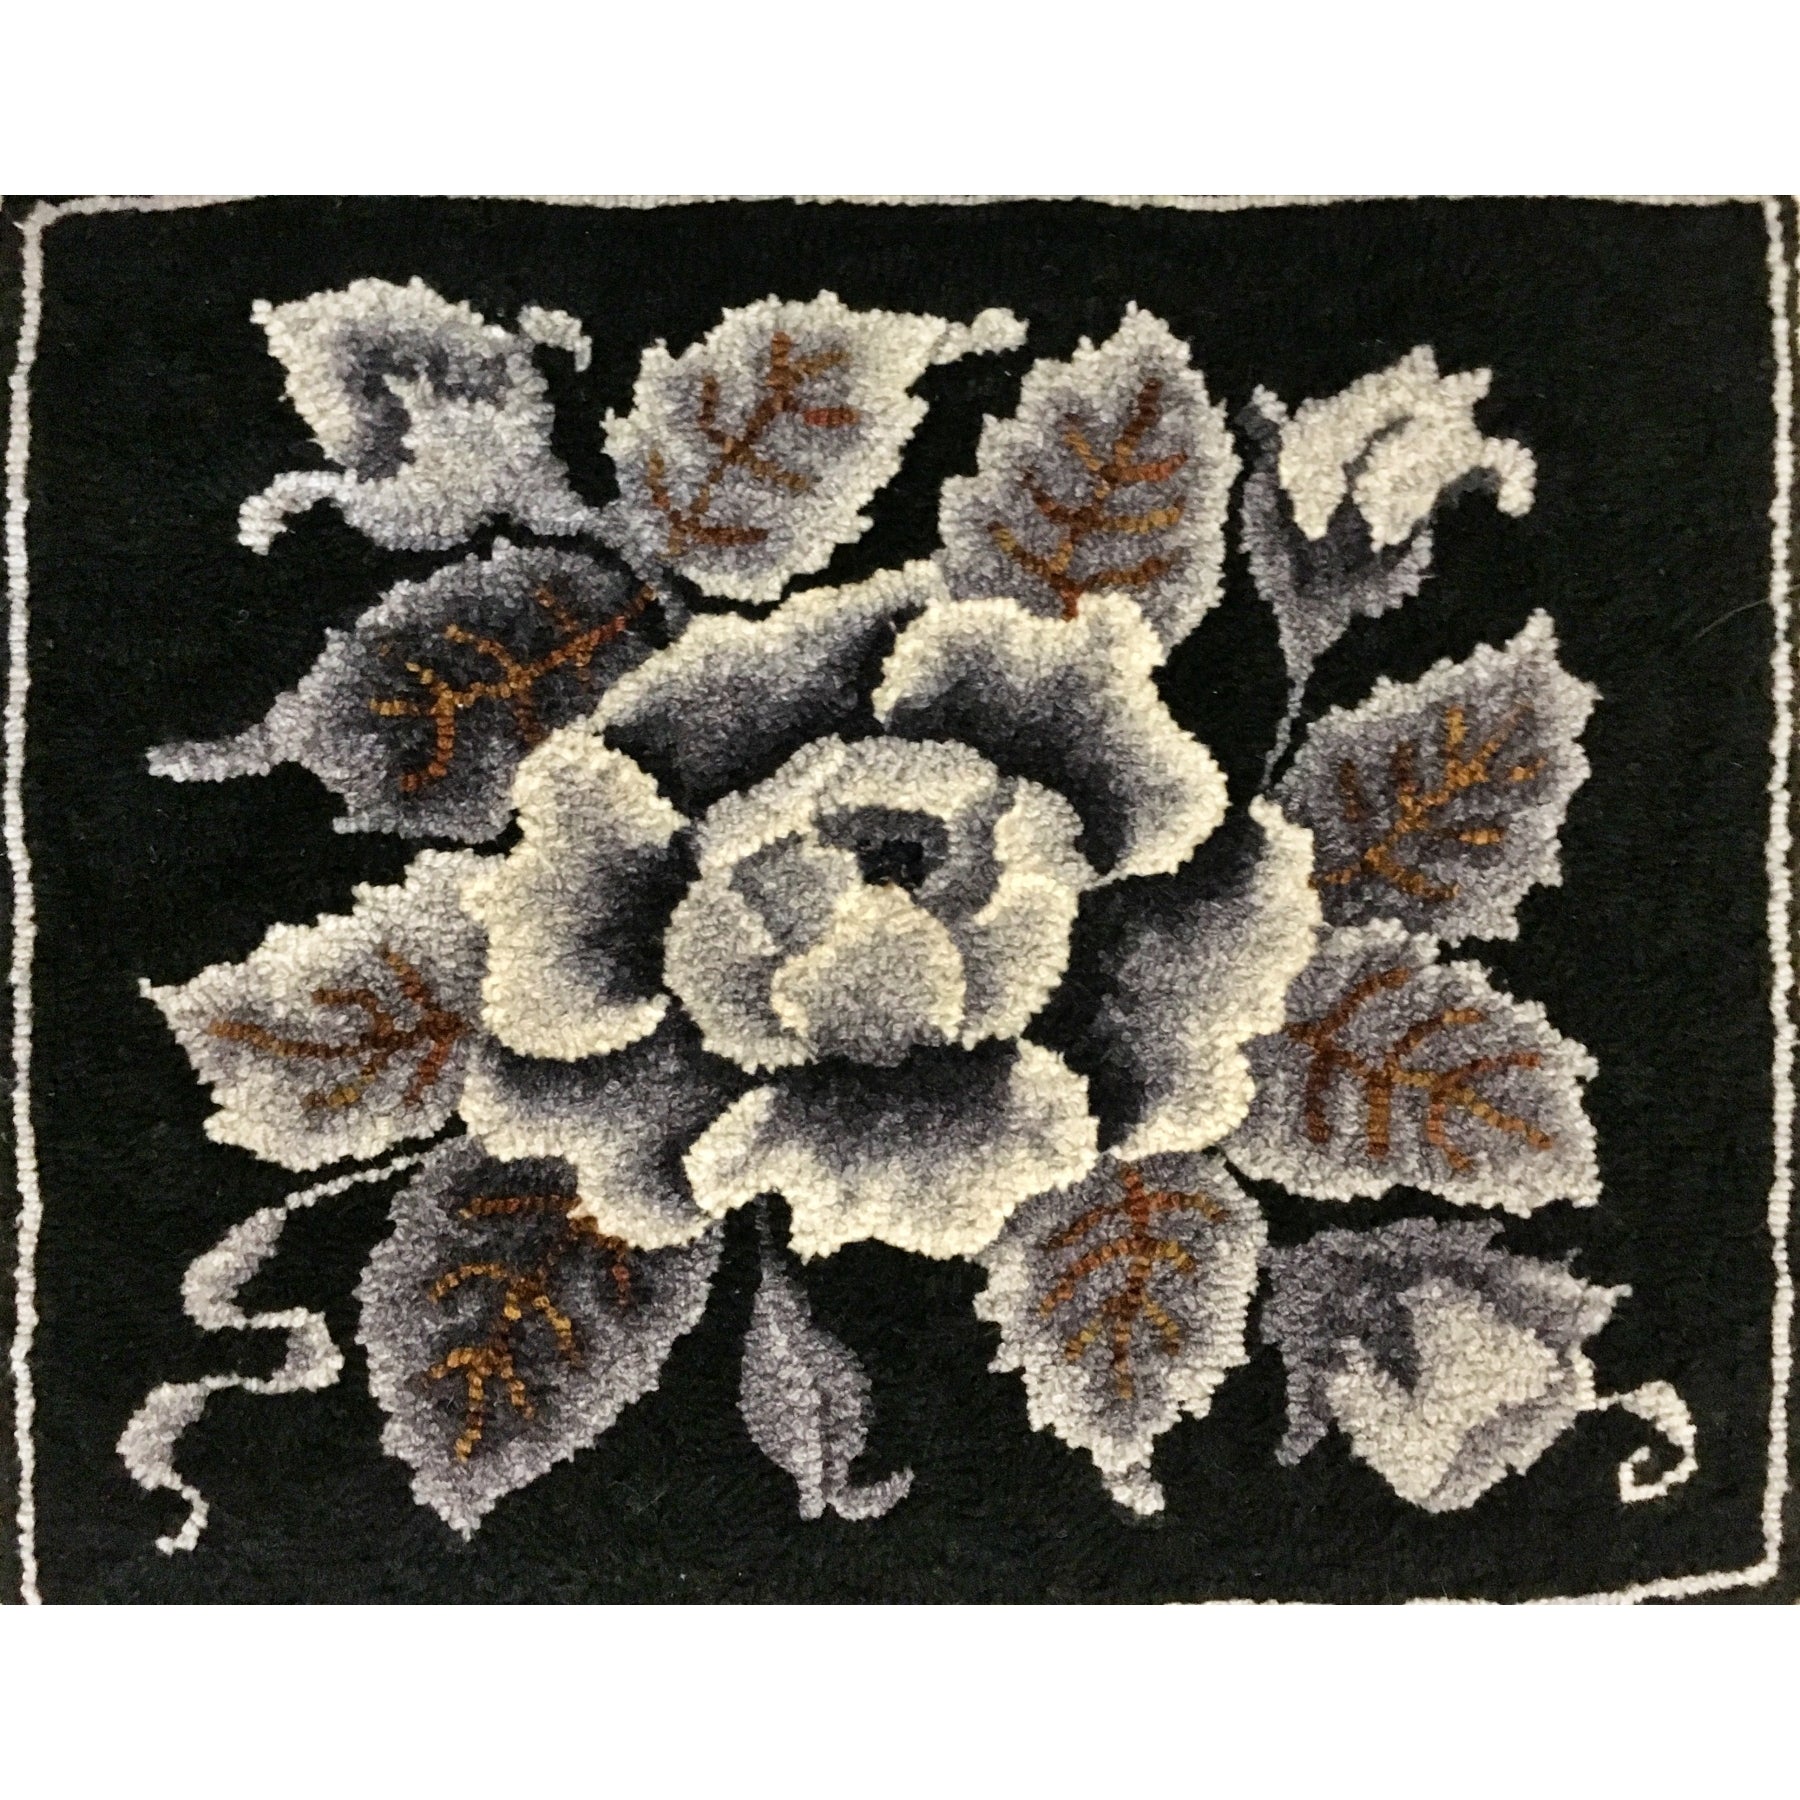 Rose, rug hooked by Benita Raleigh